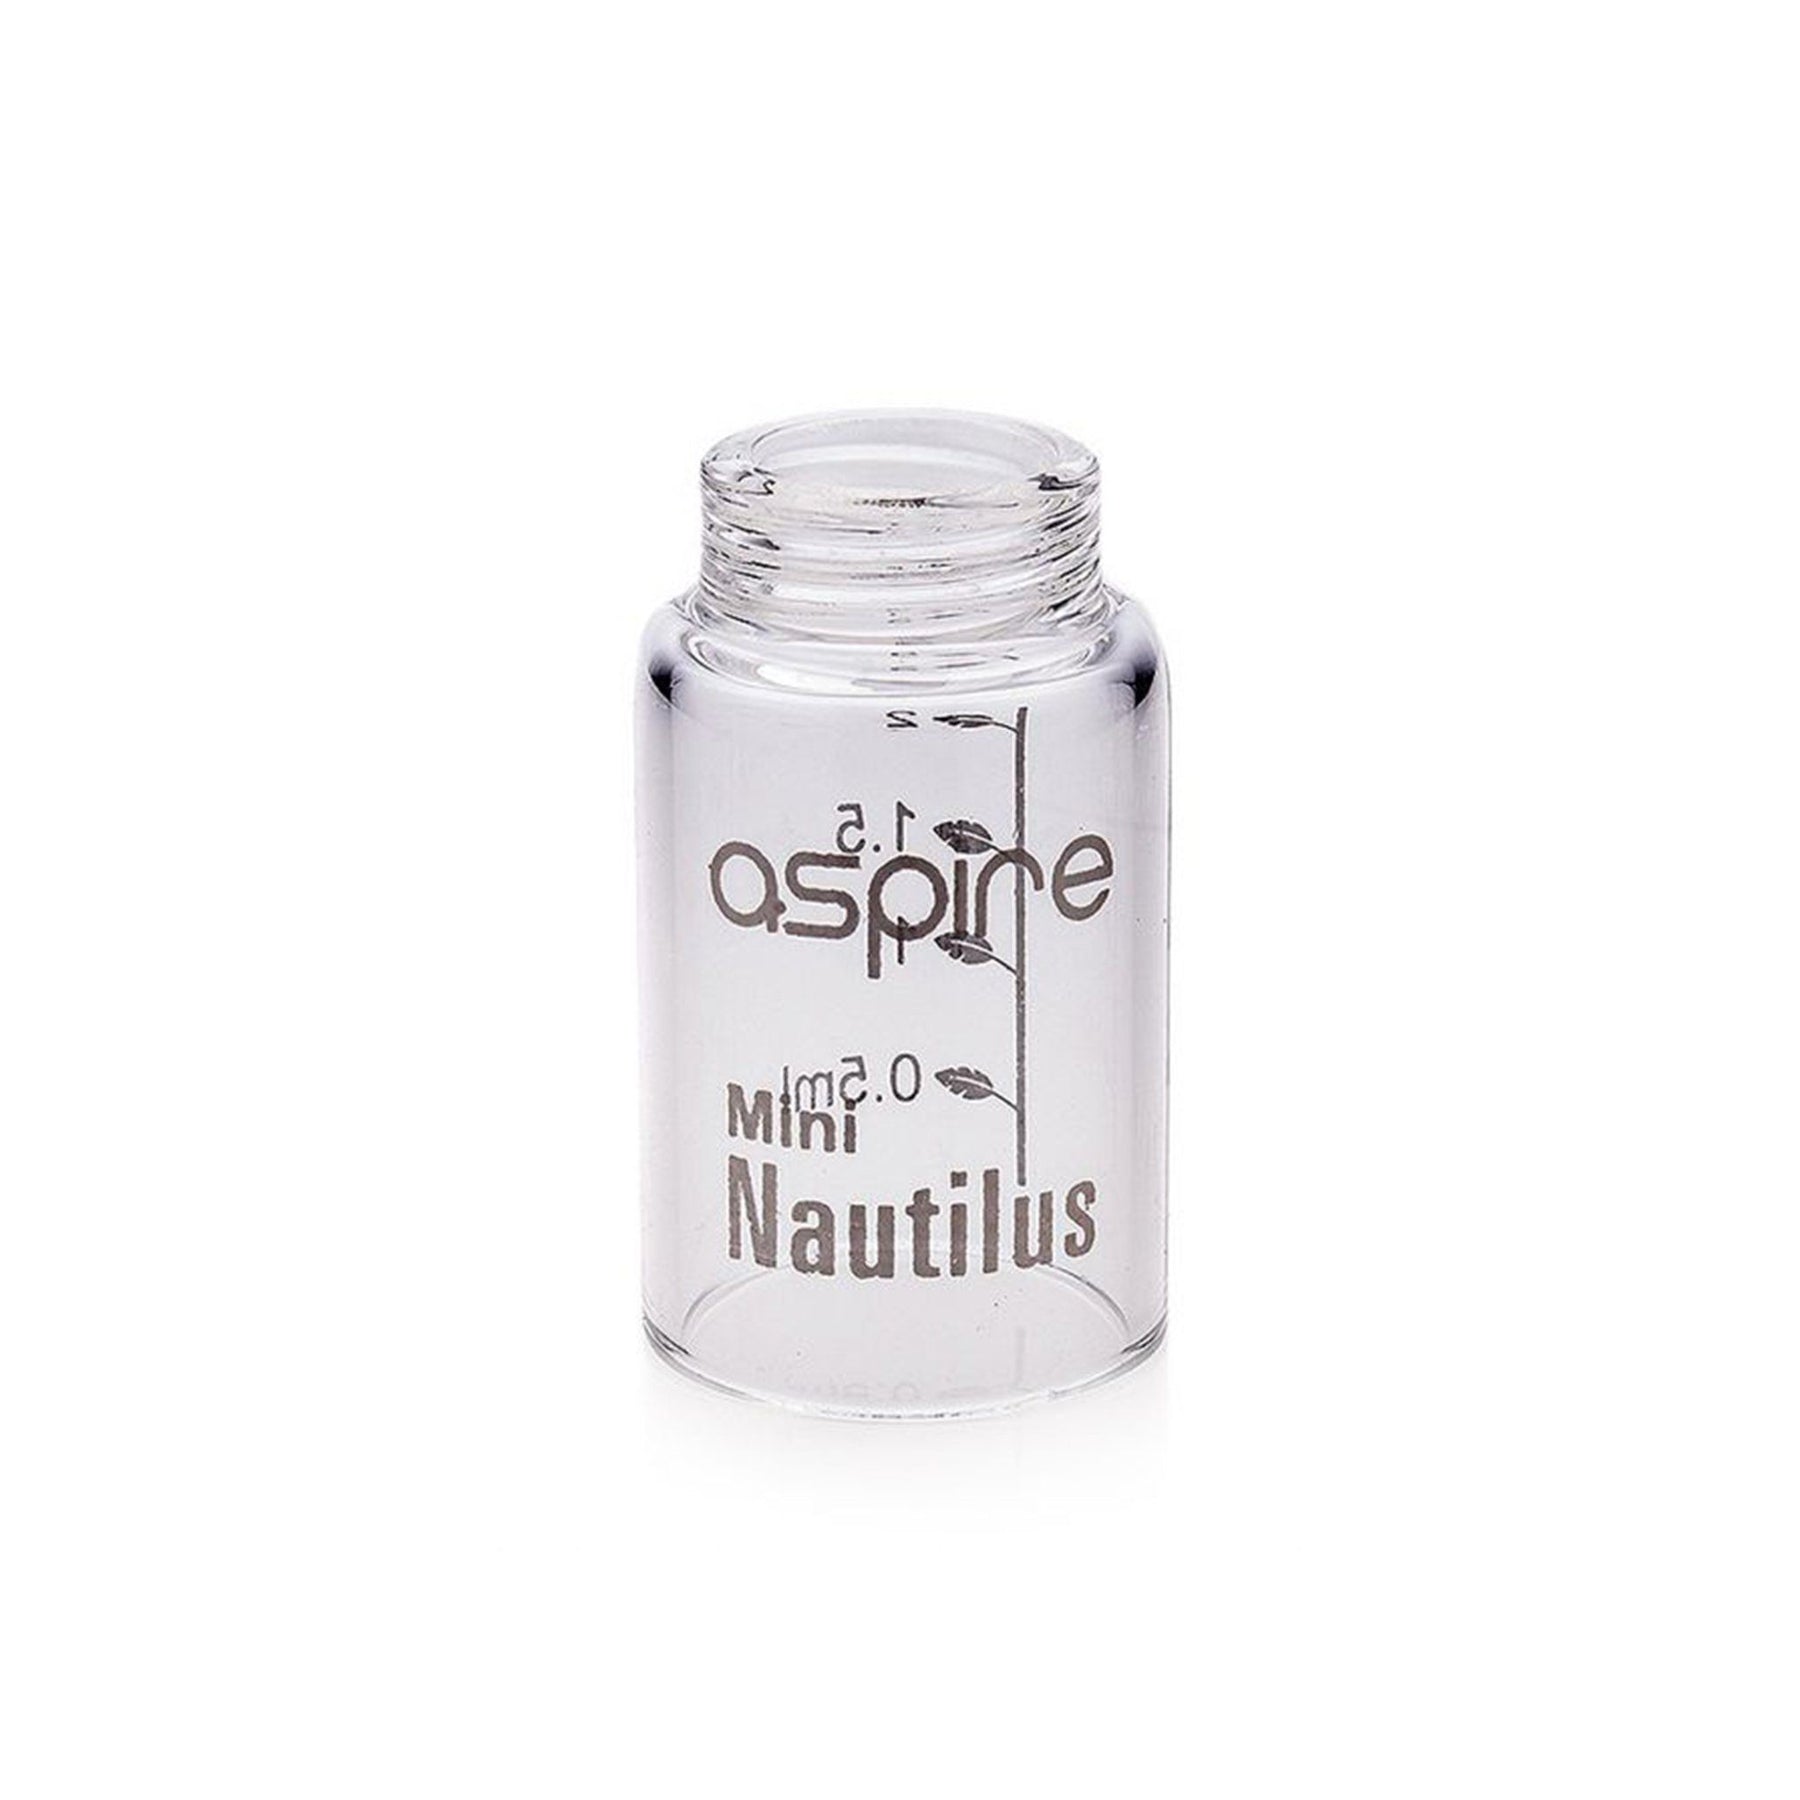 Aspire Nautilus Mini Replacement Glass Glass Pyrex